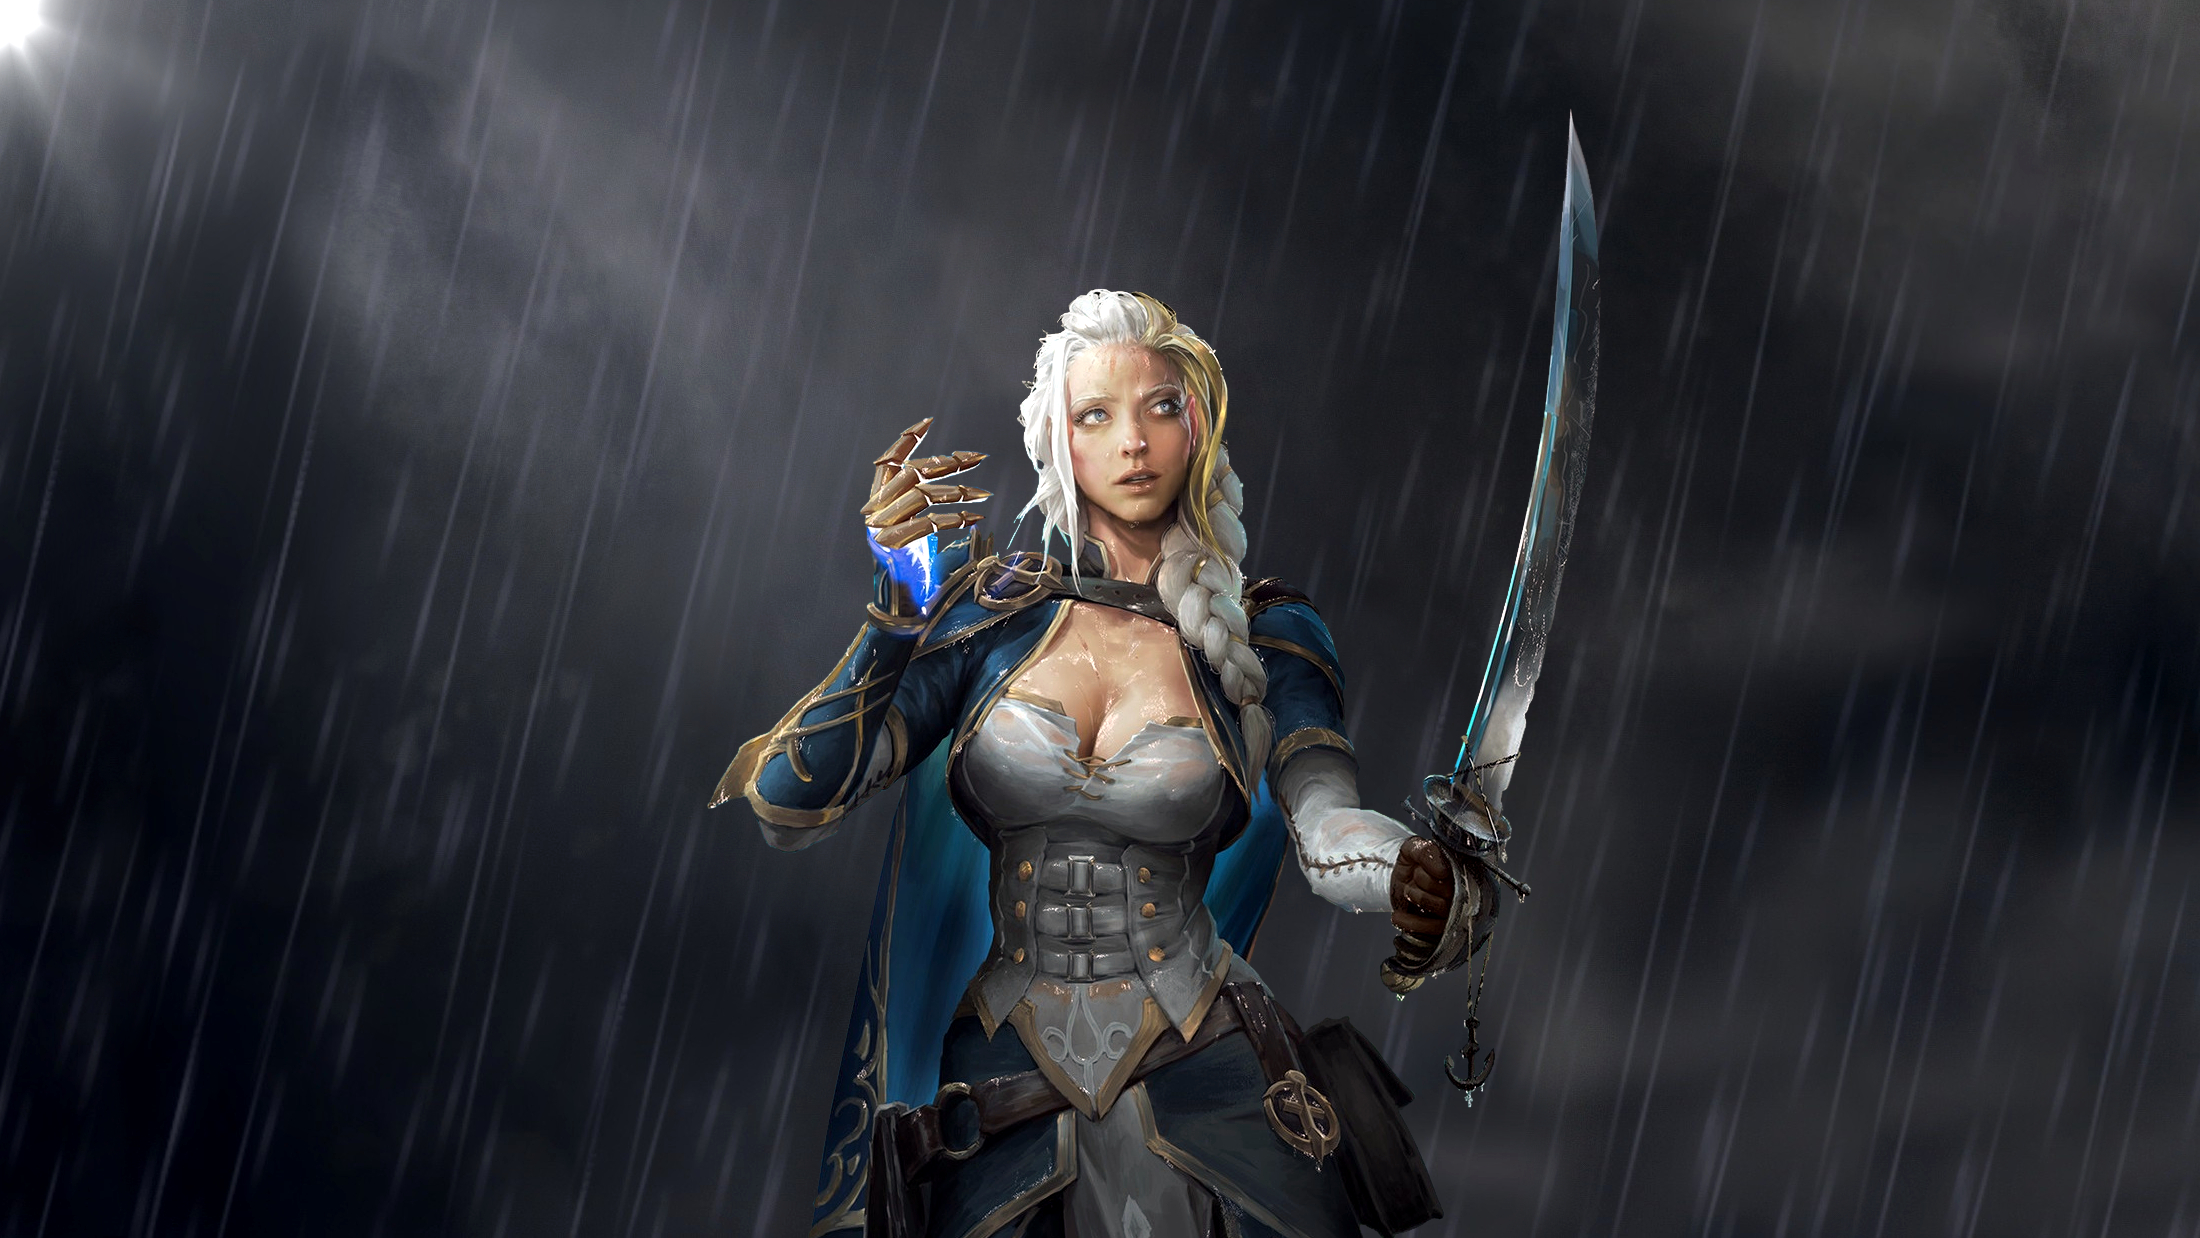 General 2200x1238 World of Warcraft Jaina Proudmoore rain wet Saber Sword sword pirate girl white hair video games video game characters video game girls Blizzard Entertainment